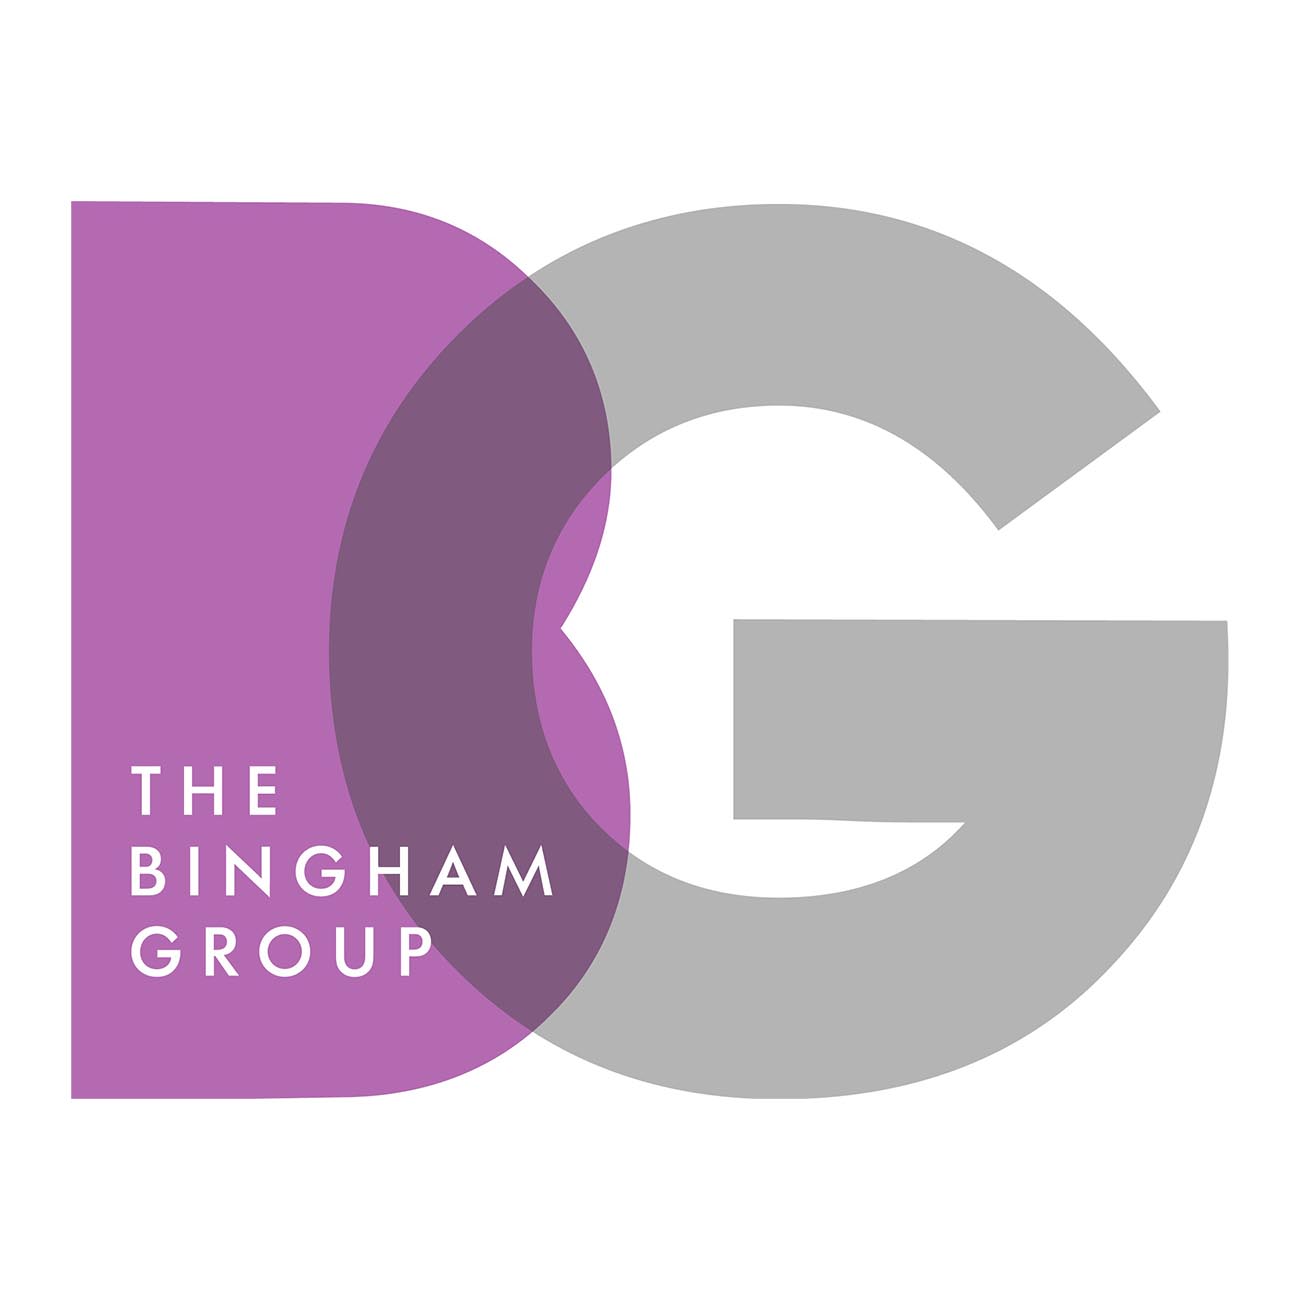 The Bingham Group